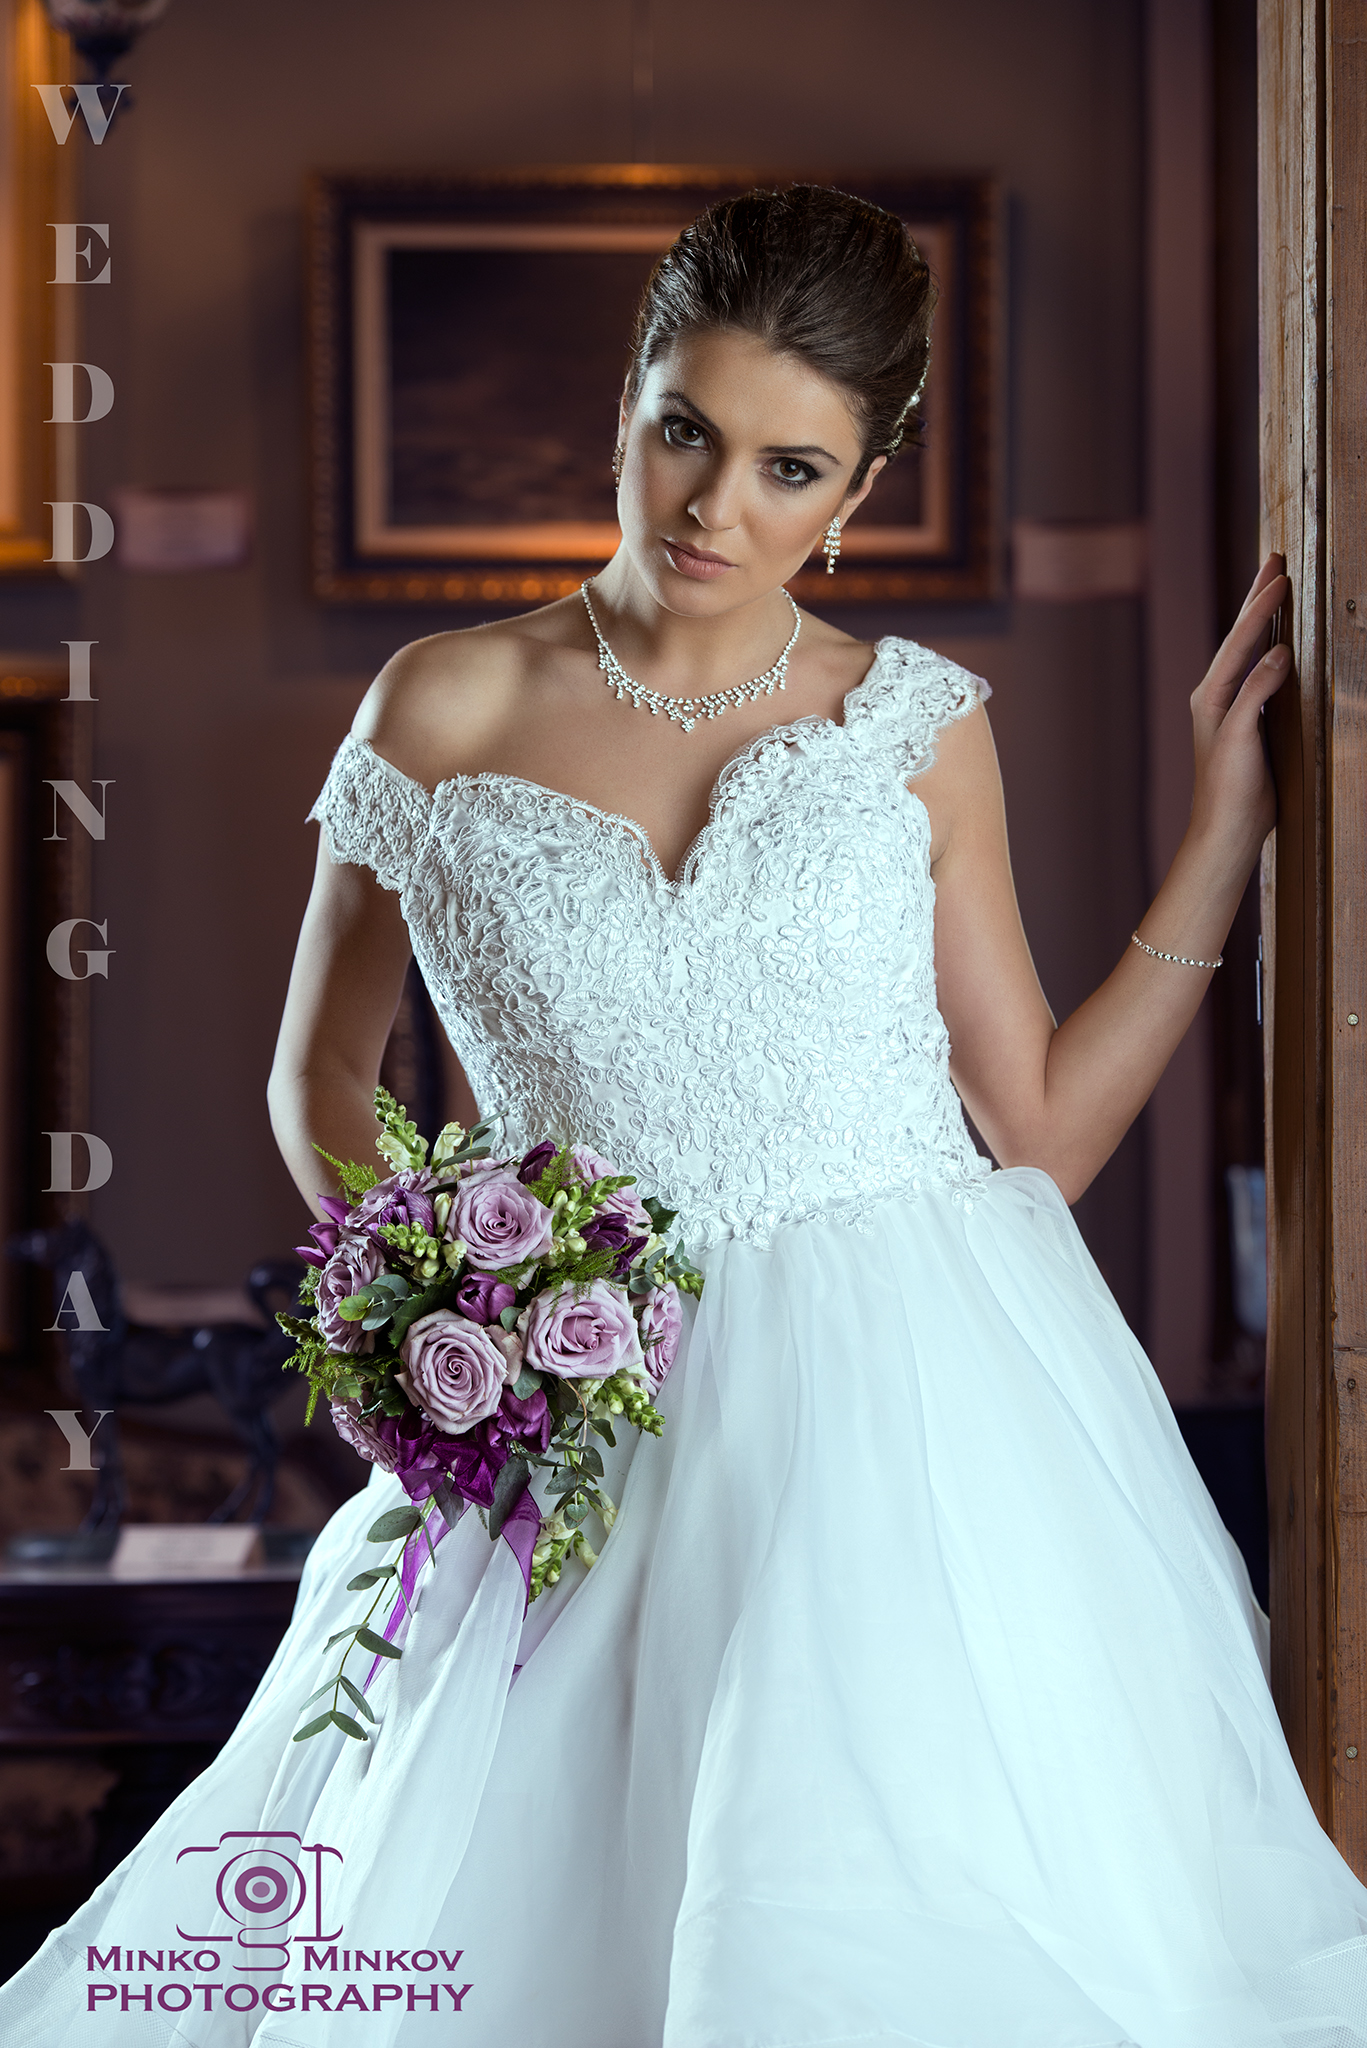 Minko Minkov Flowers Bouquets White Dress Women Necklace Bracelets Frock Brides Wedding Dress 1367x2048